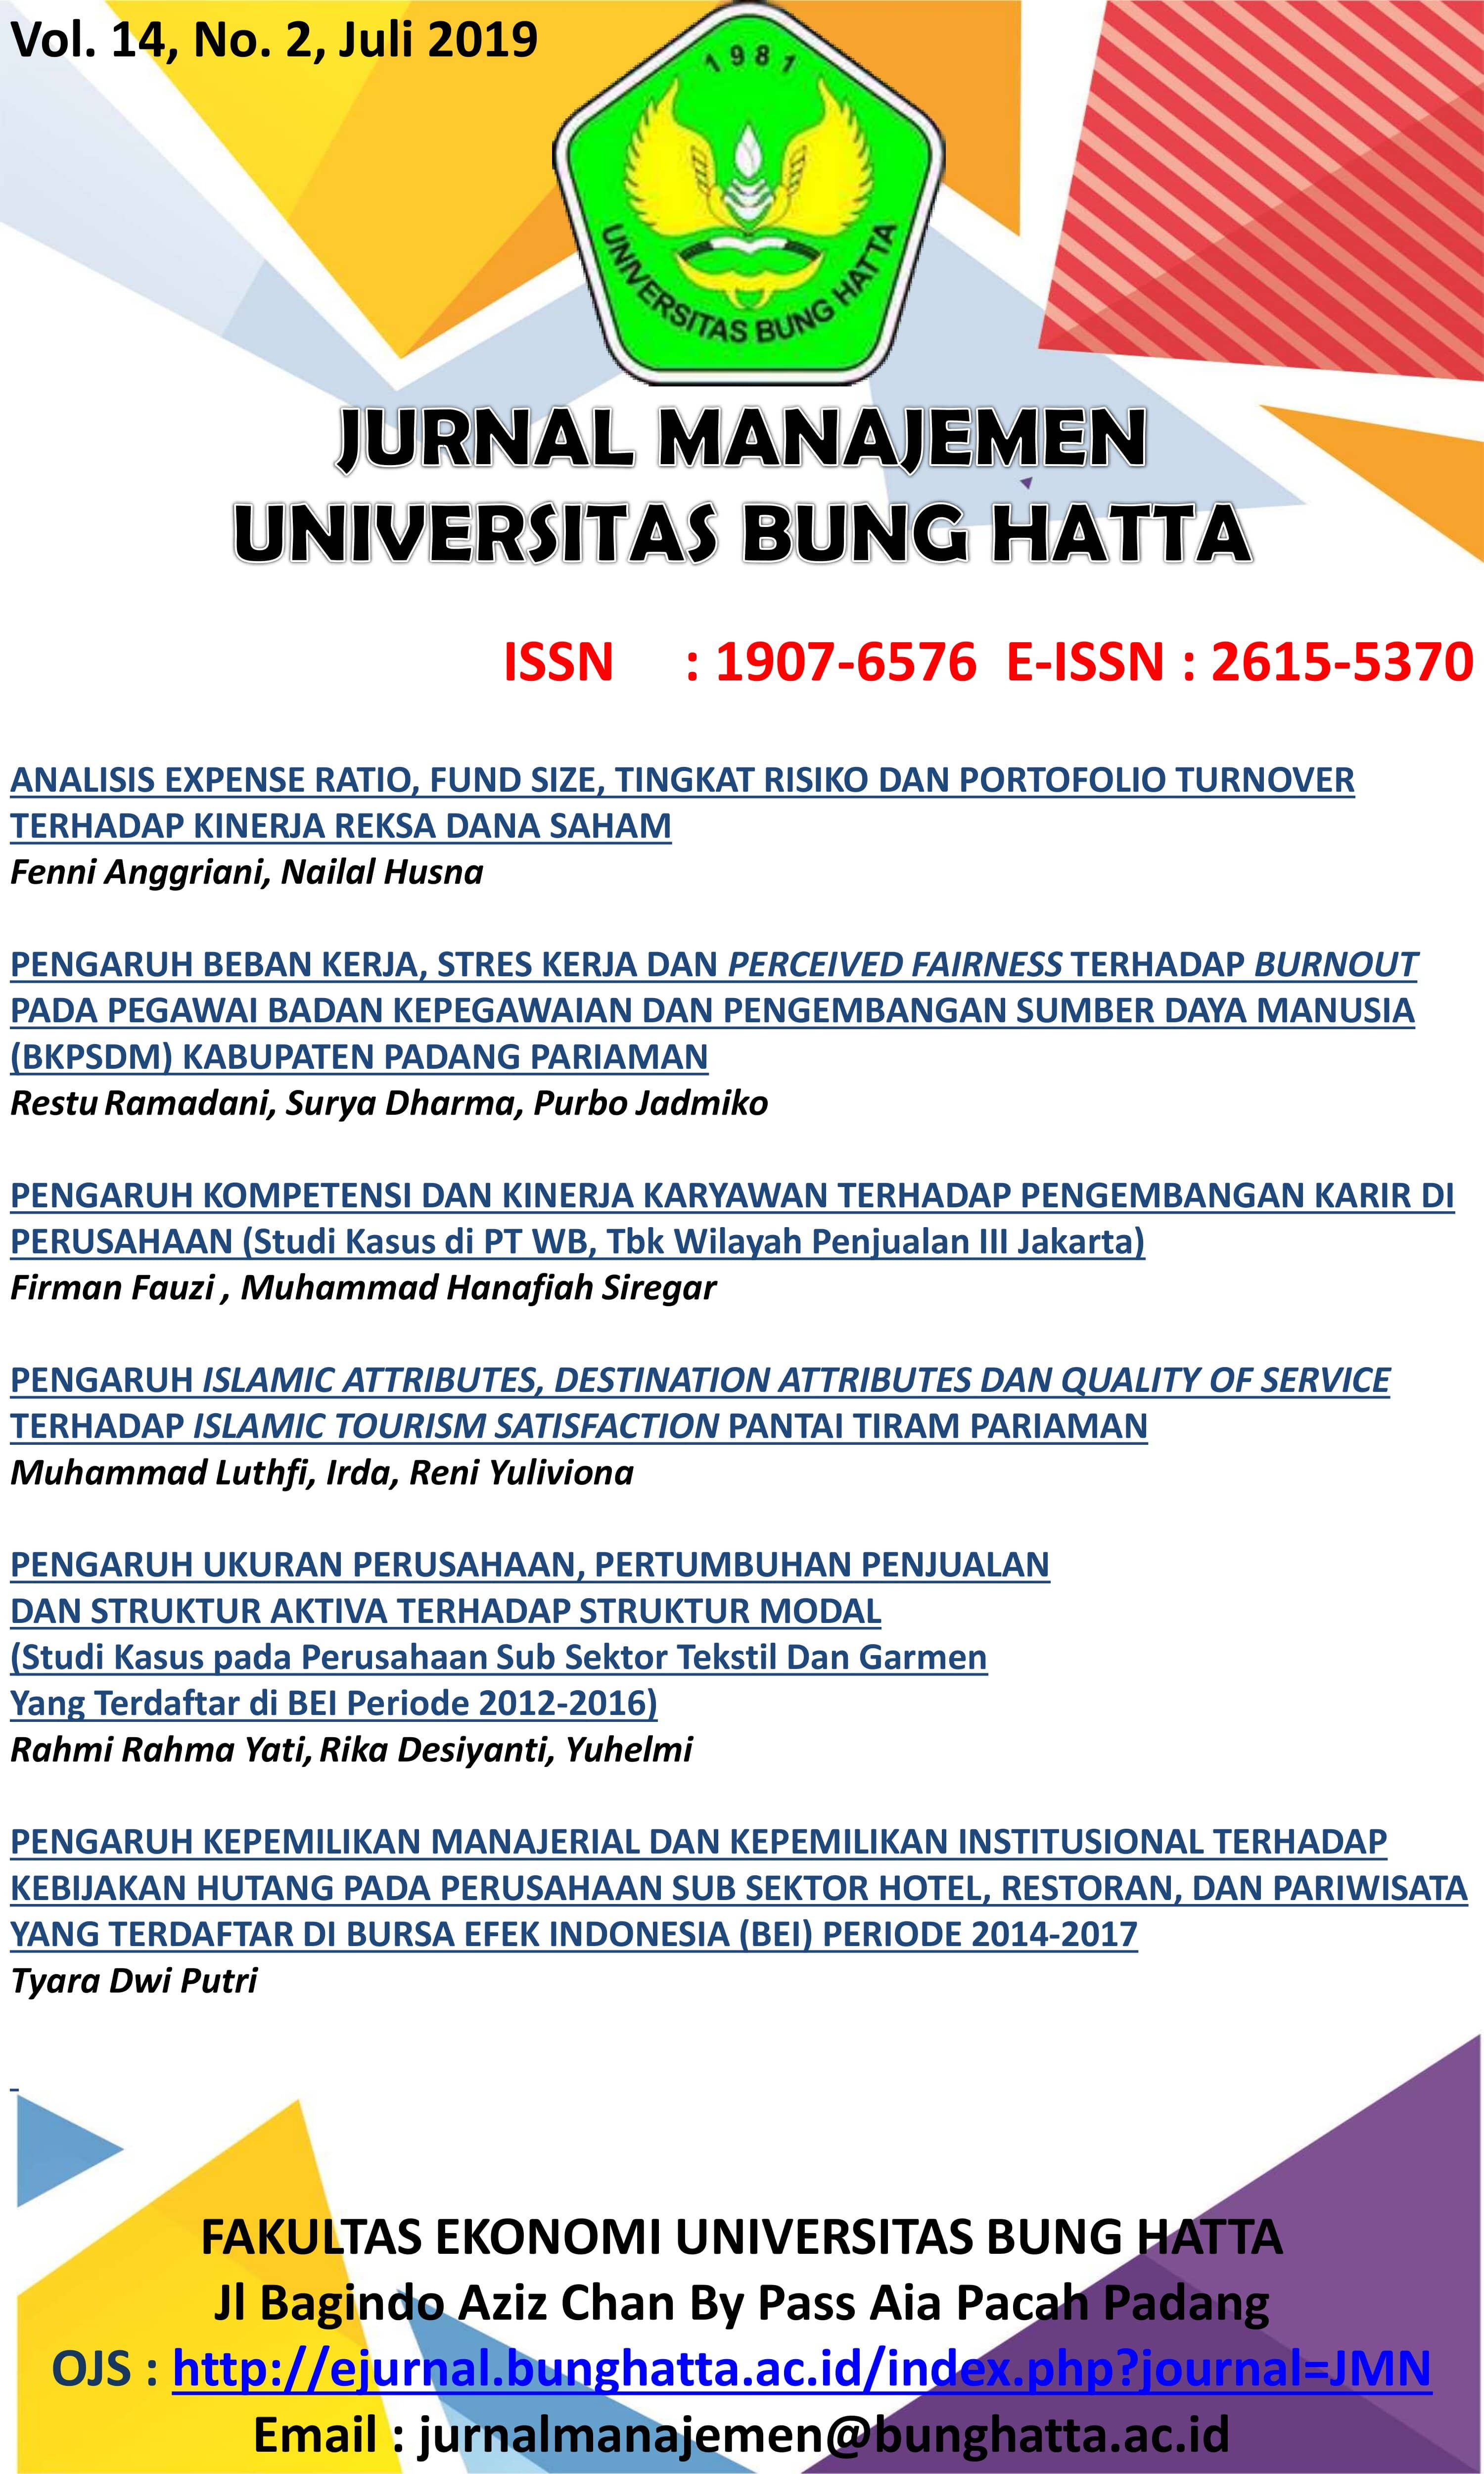 					View Vol. 14 No. 2 (2019): Jurnal Manajemen Universitas Bung Hatta
				